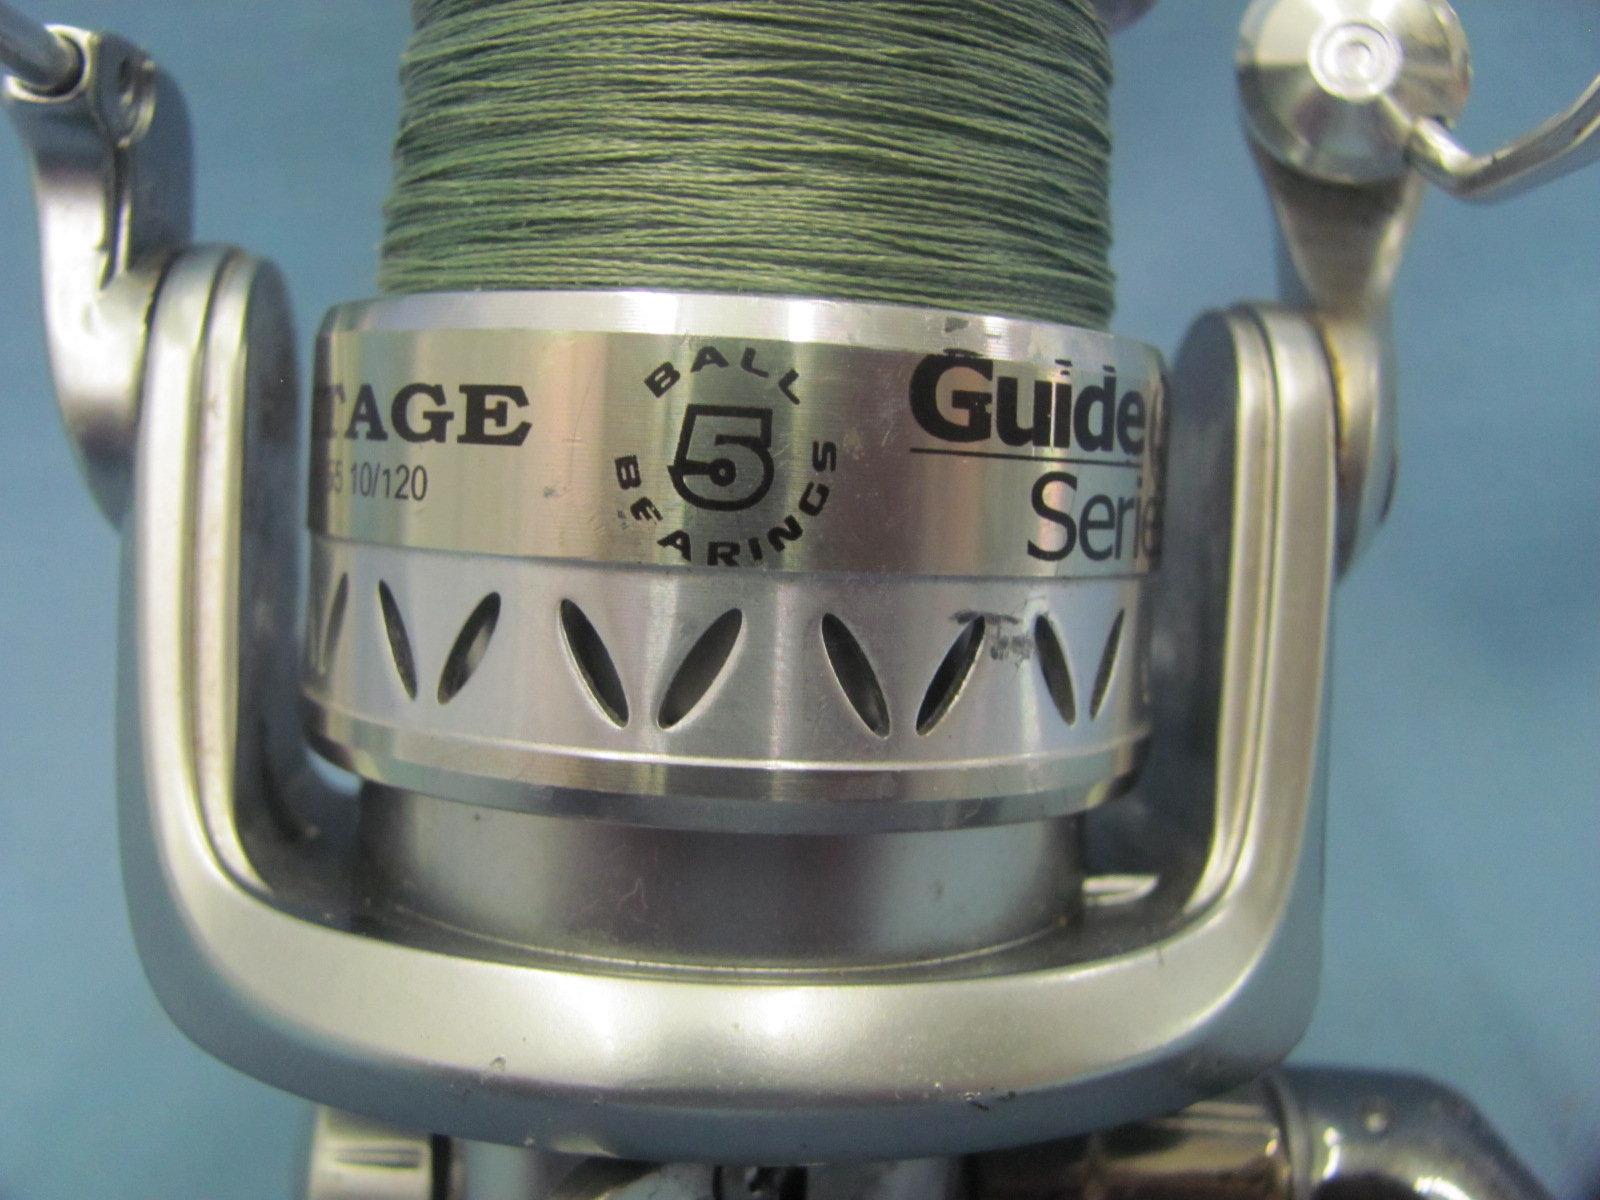 Guide Series GSA 30 Spinning Reel & Zebco Spinner Model 33 Reel